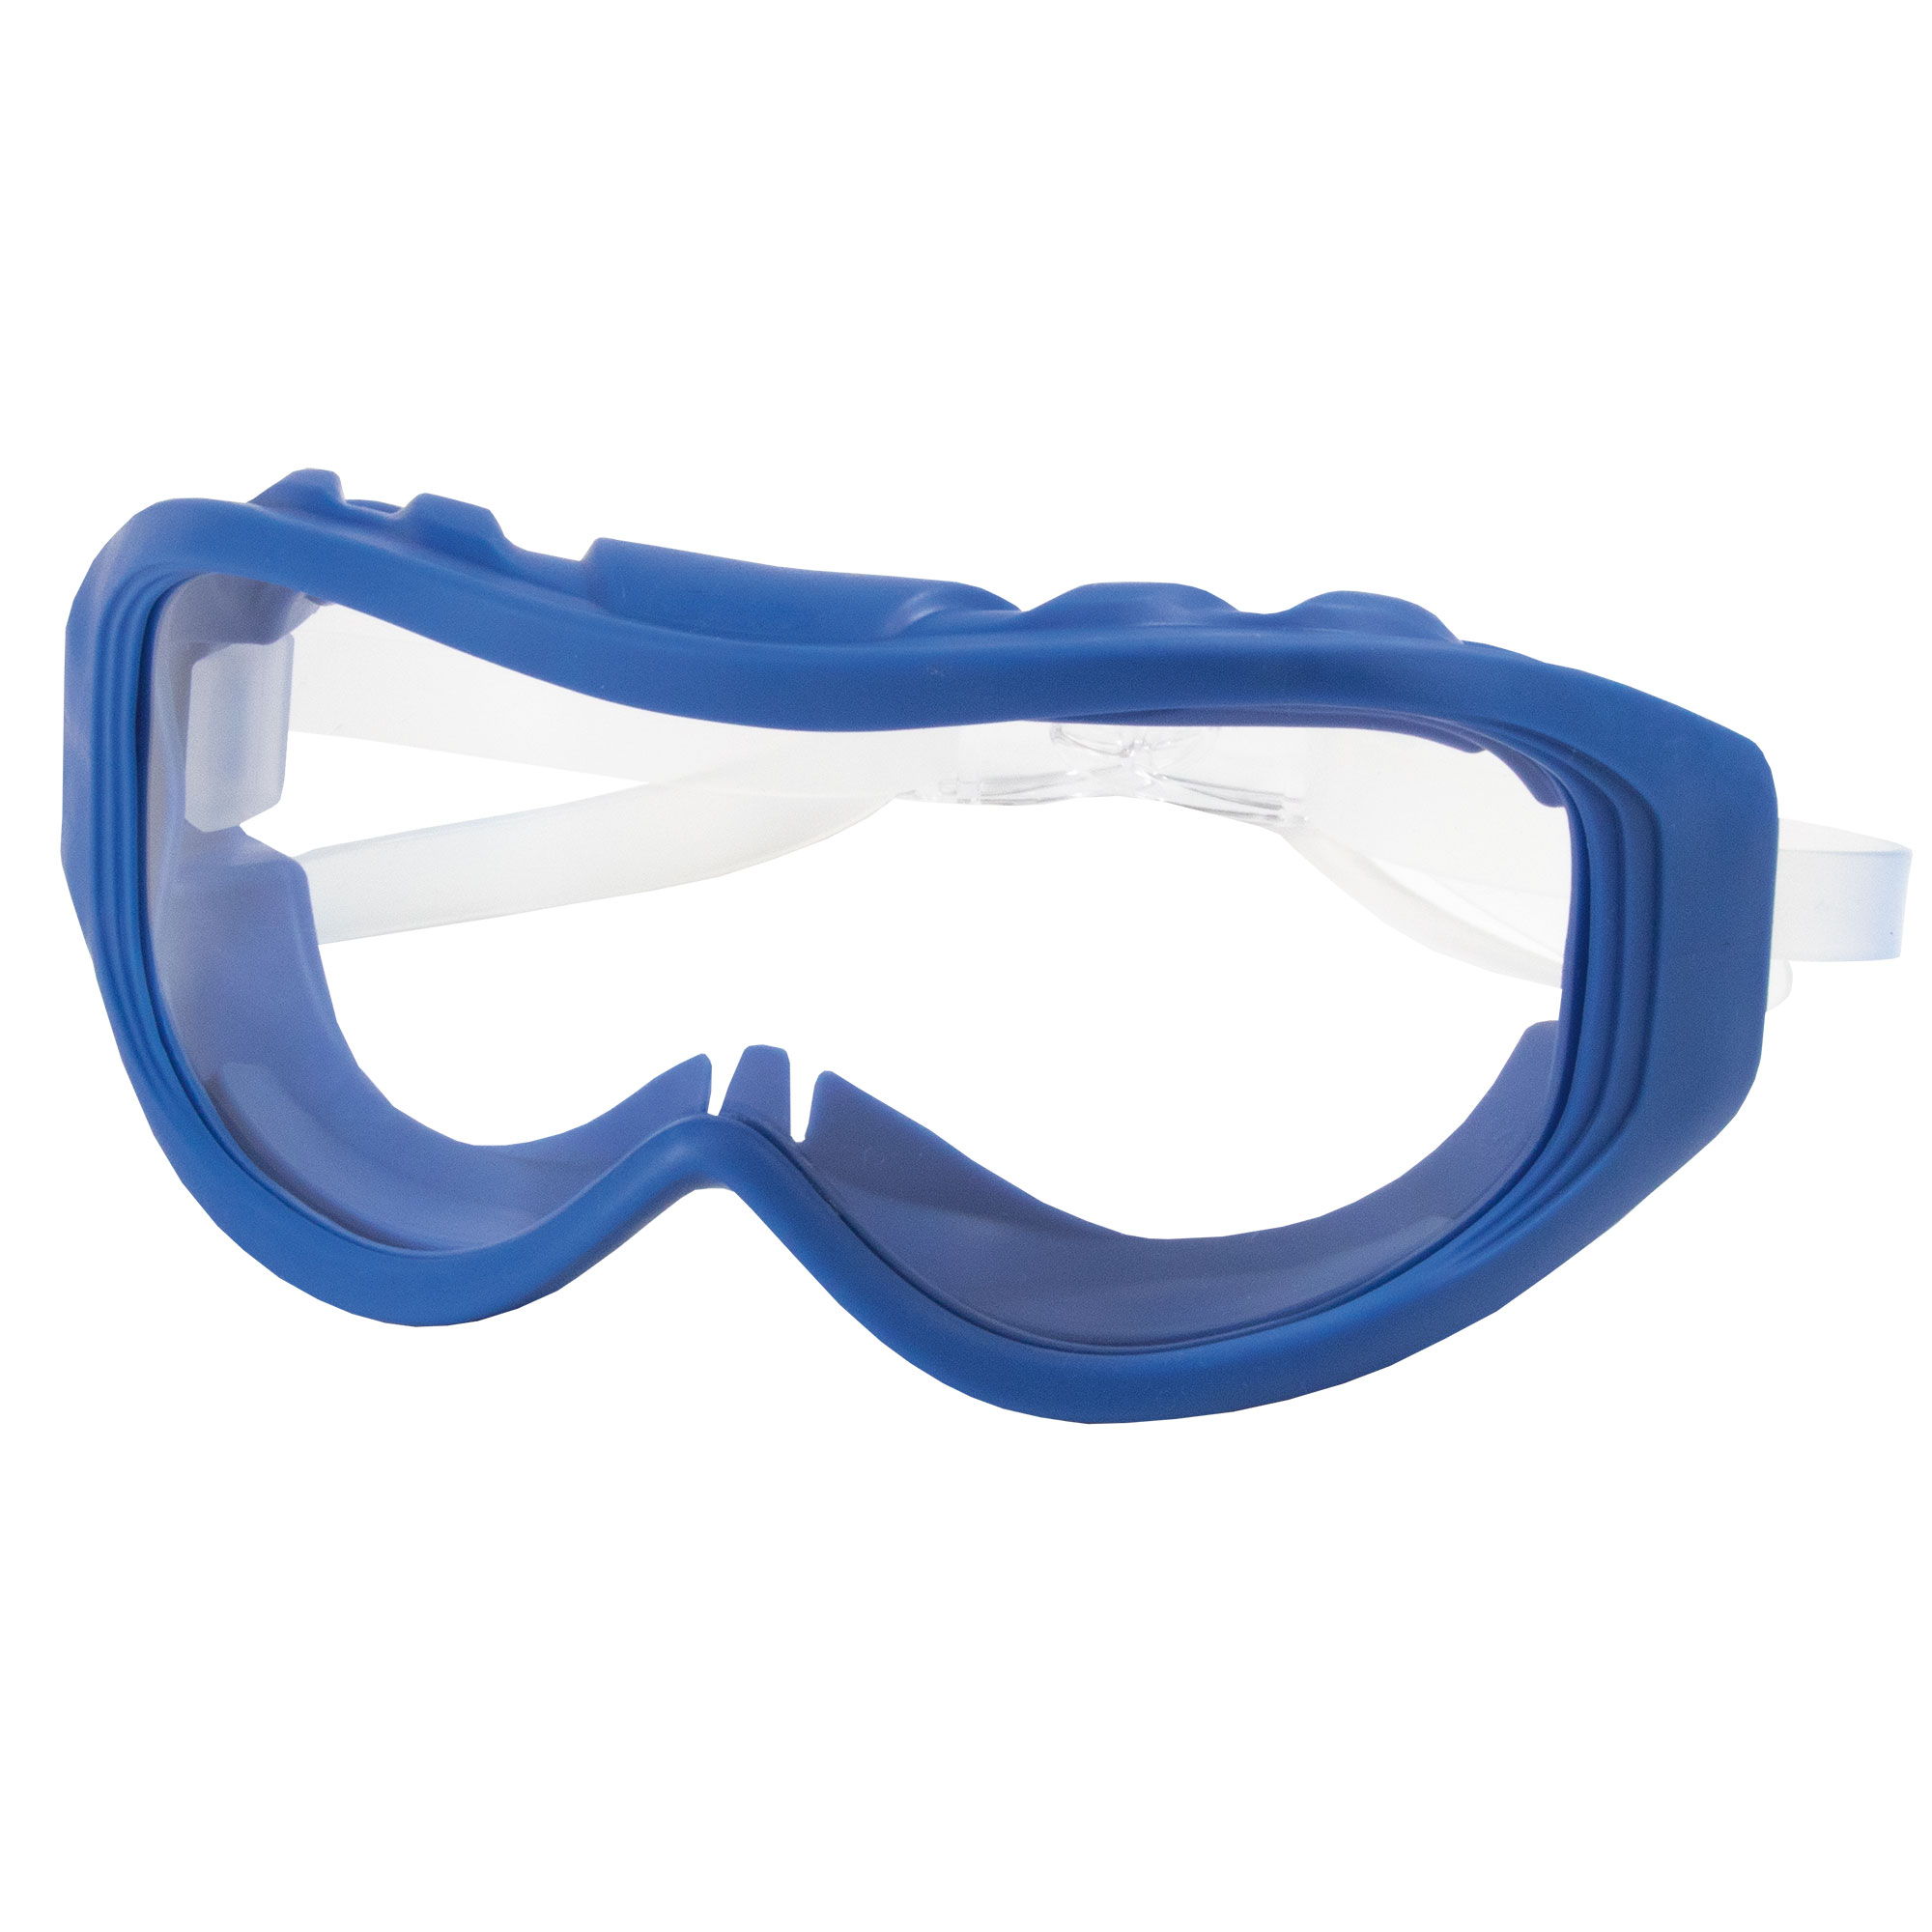 Reusable Safety Goggles SimViz